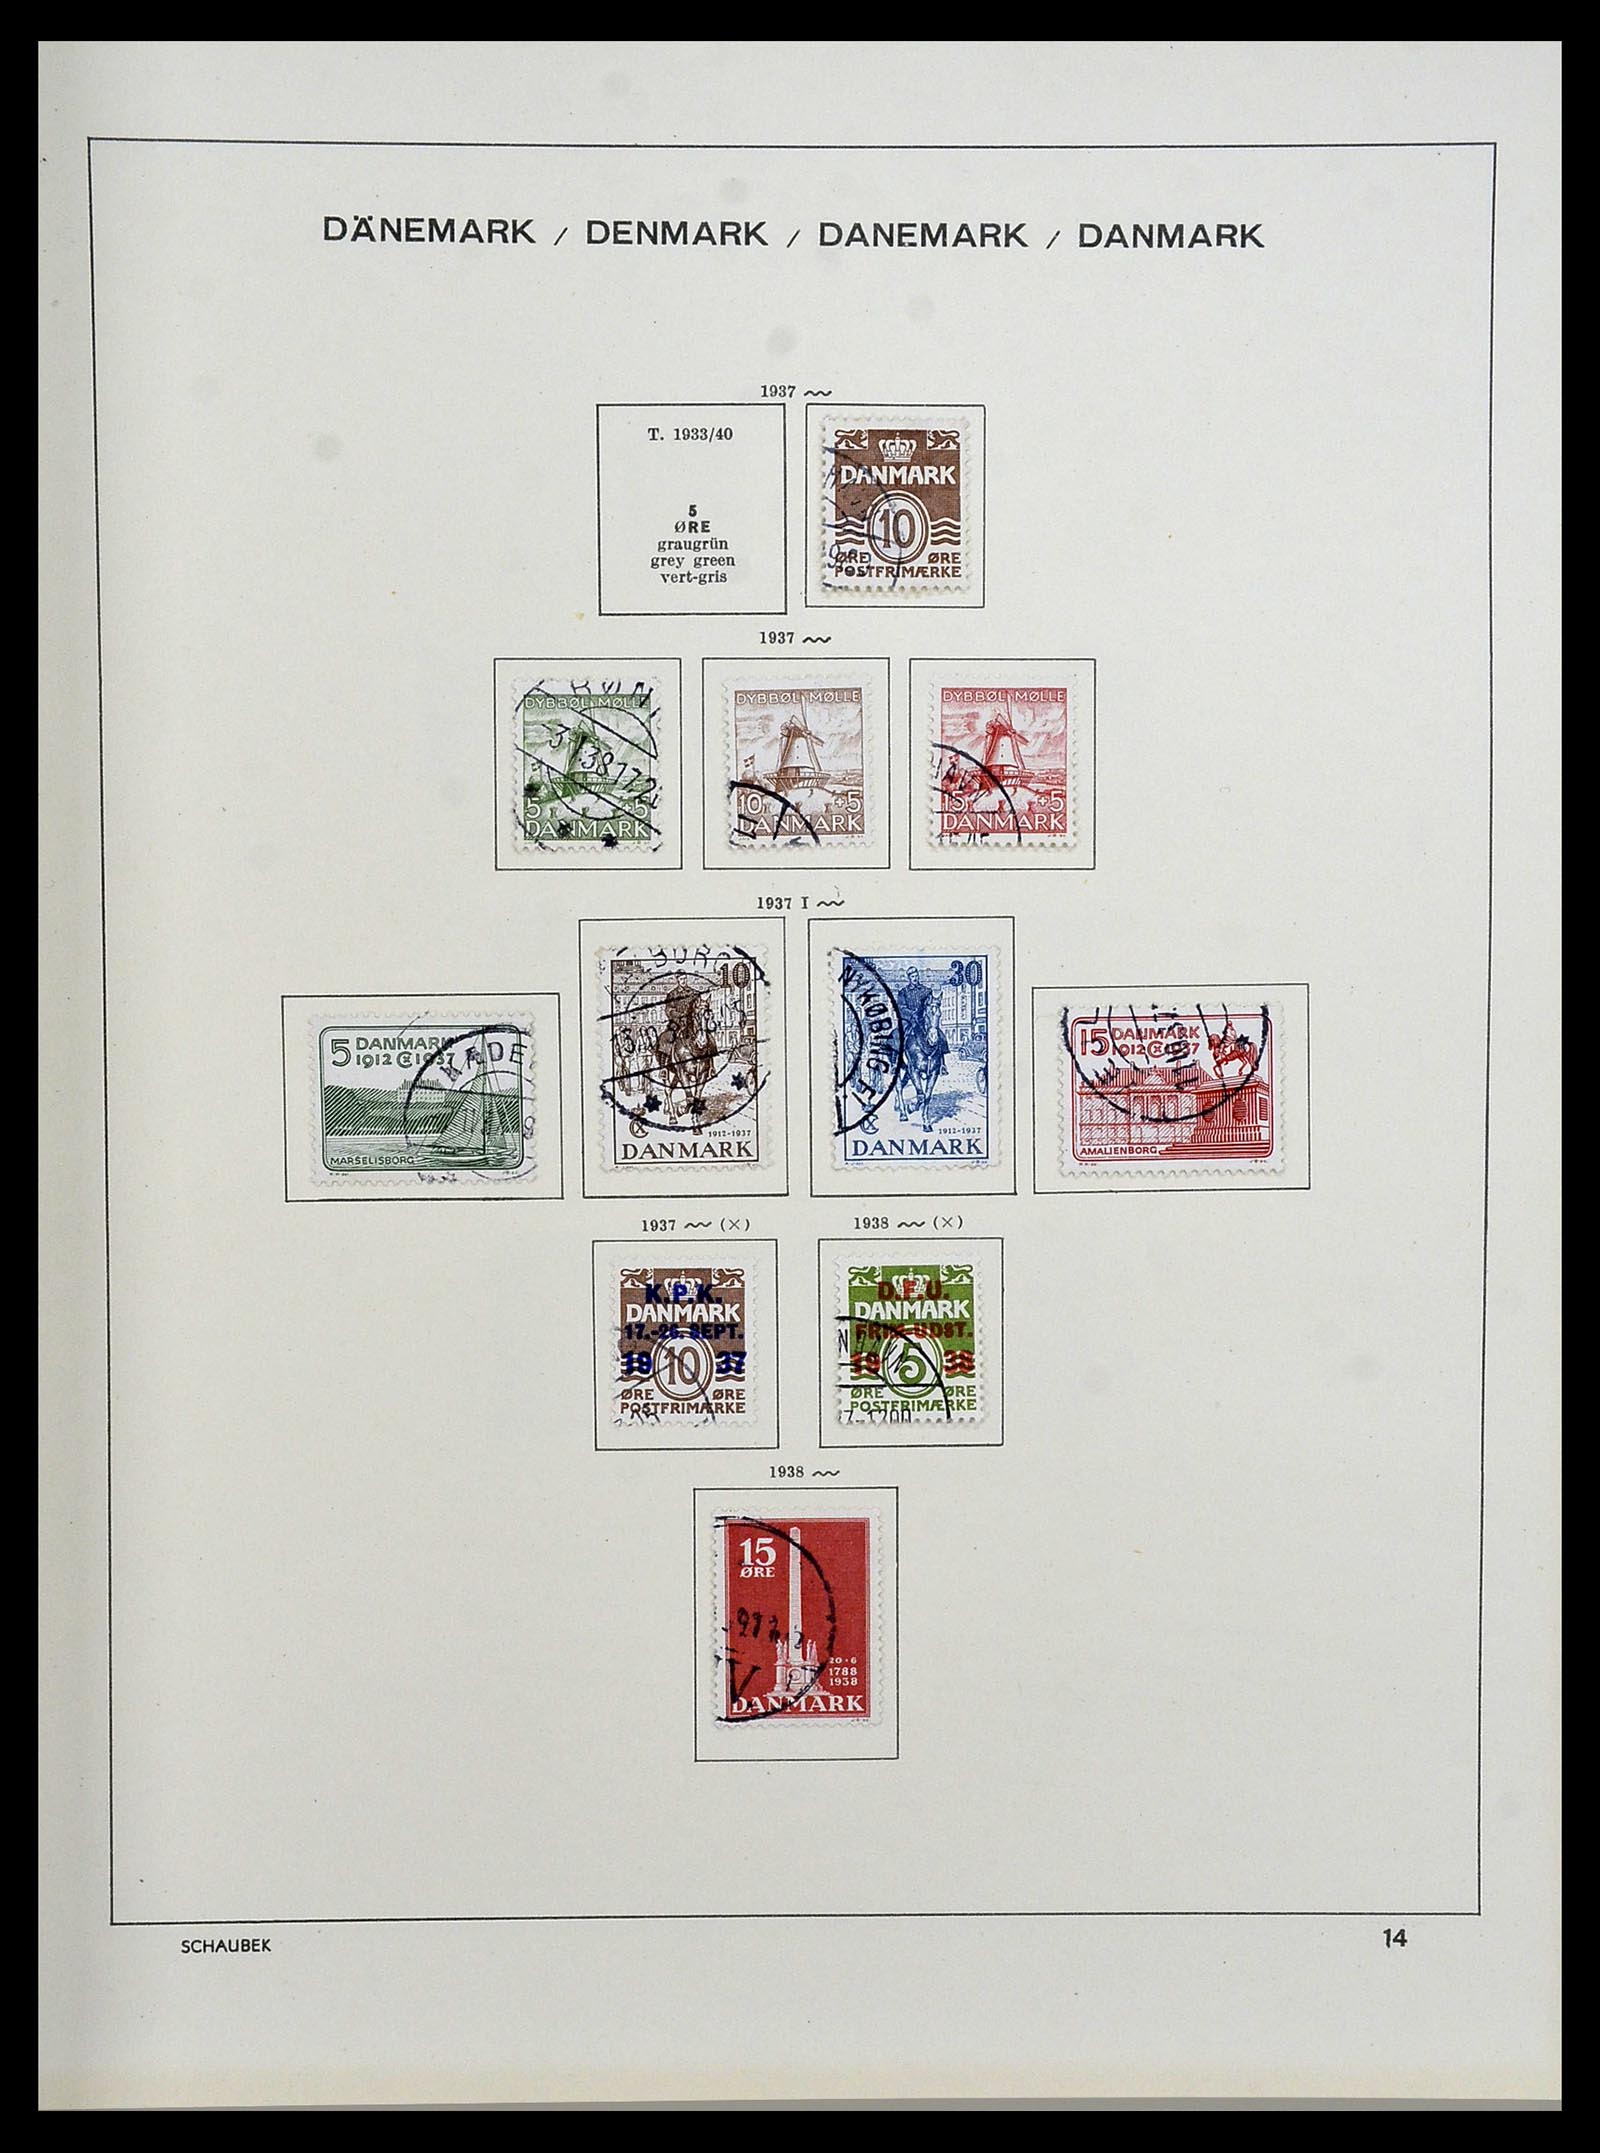 34312 019 - Stamp collection 34312 Scandinavia 1855-1965.